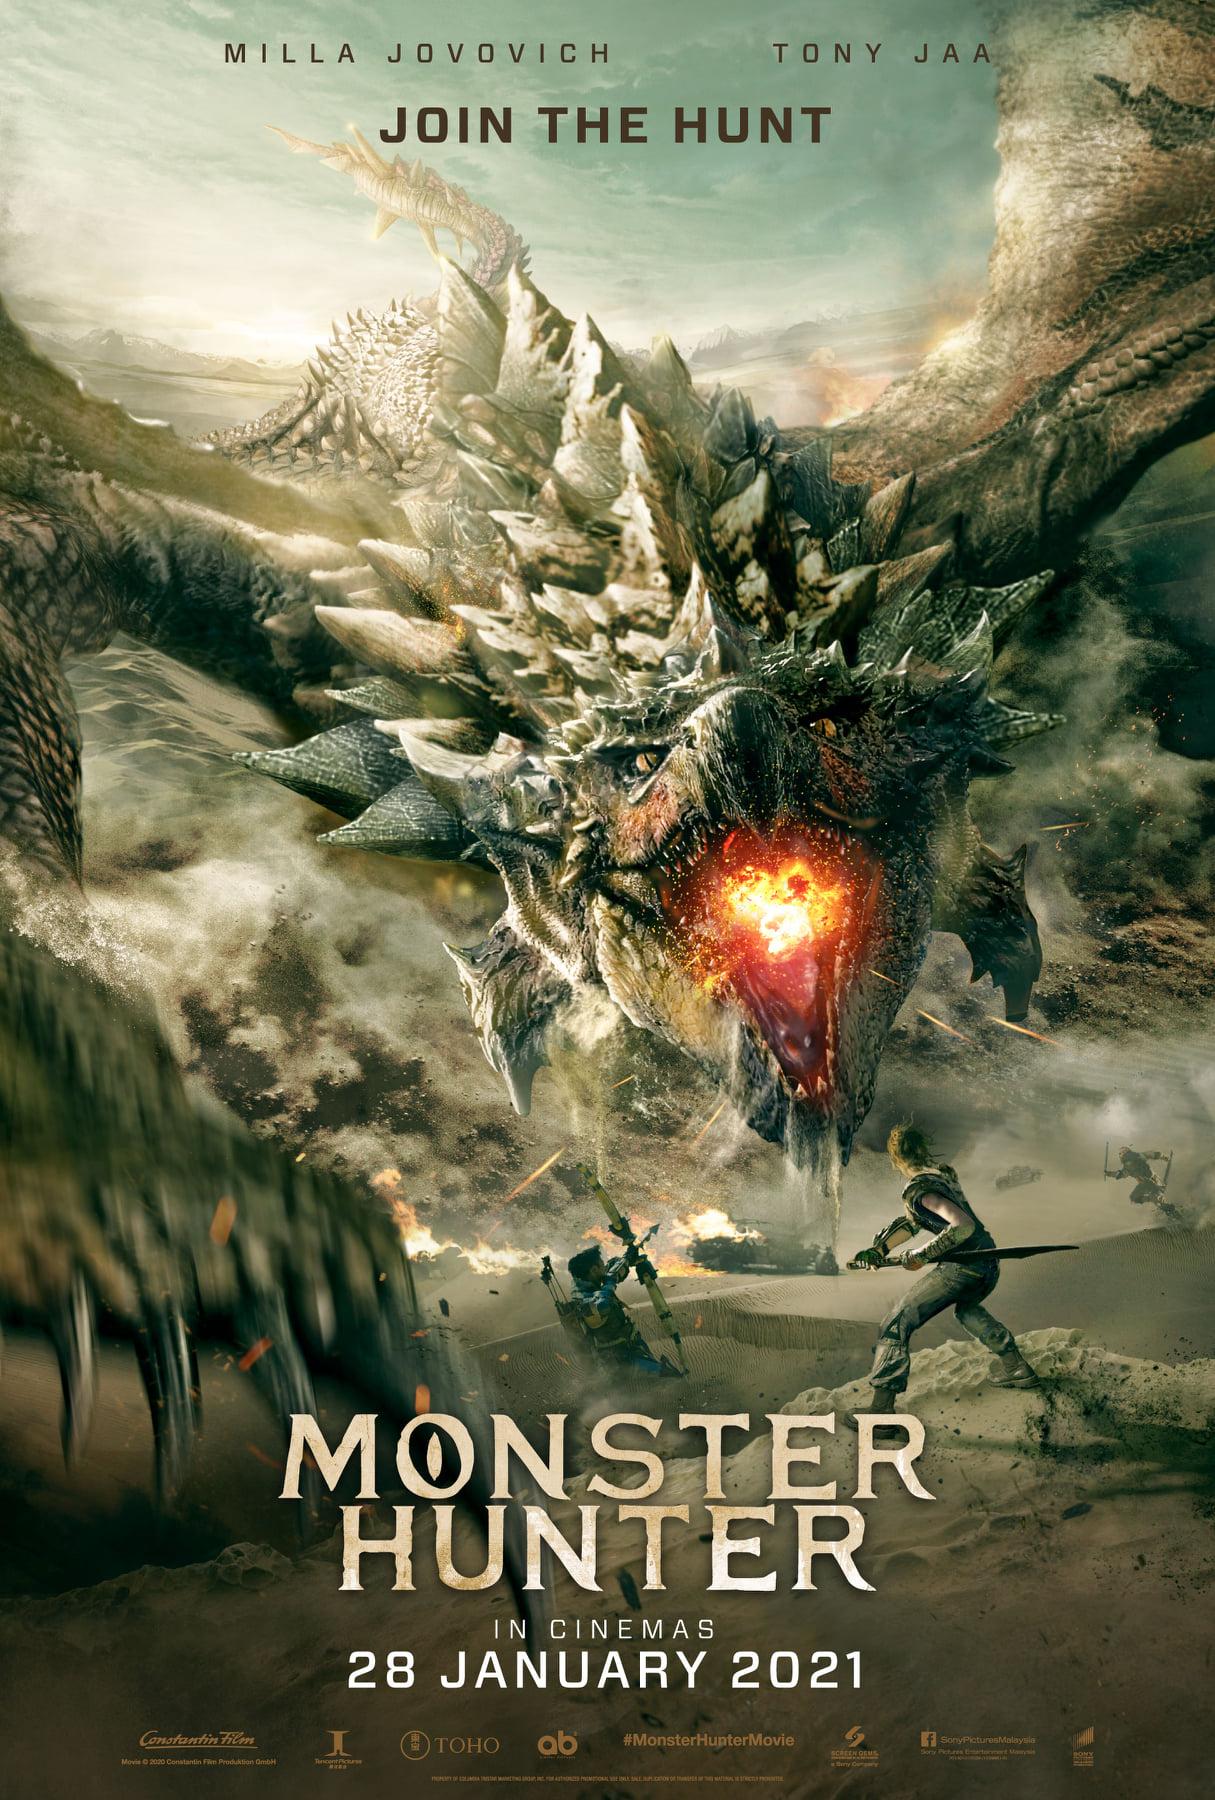 Tony Jaa در صحنه فیلم سینمایی Monster Hunter به همراه میلا یوویچ